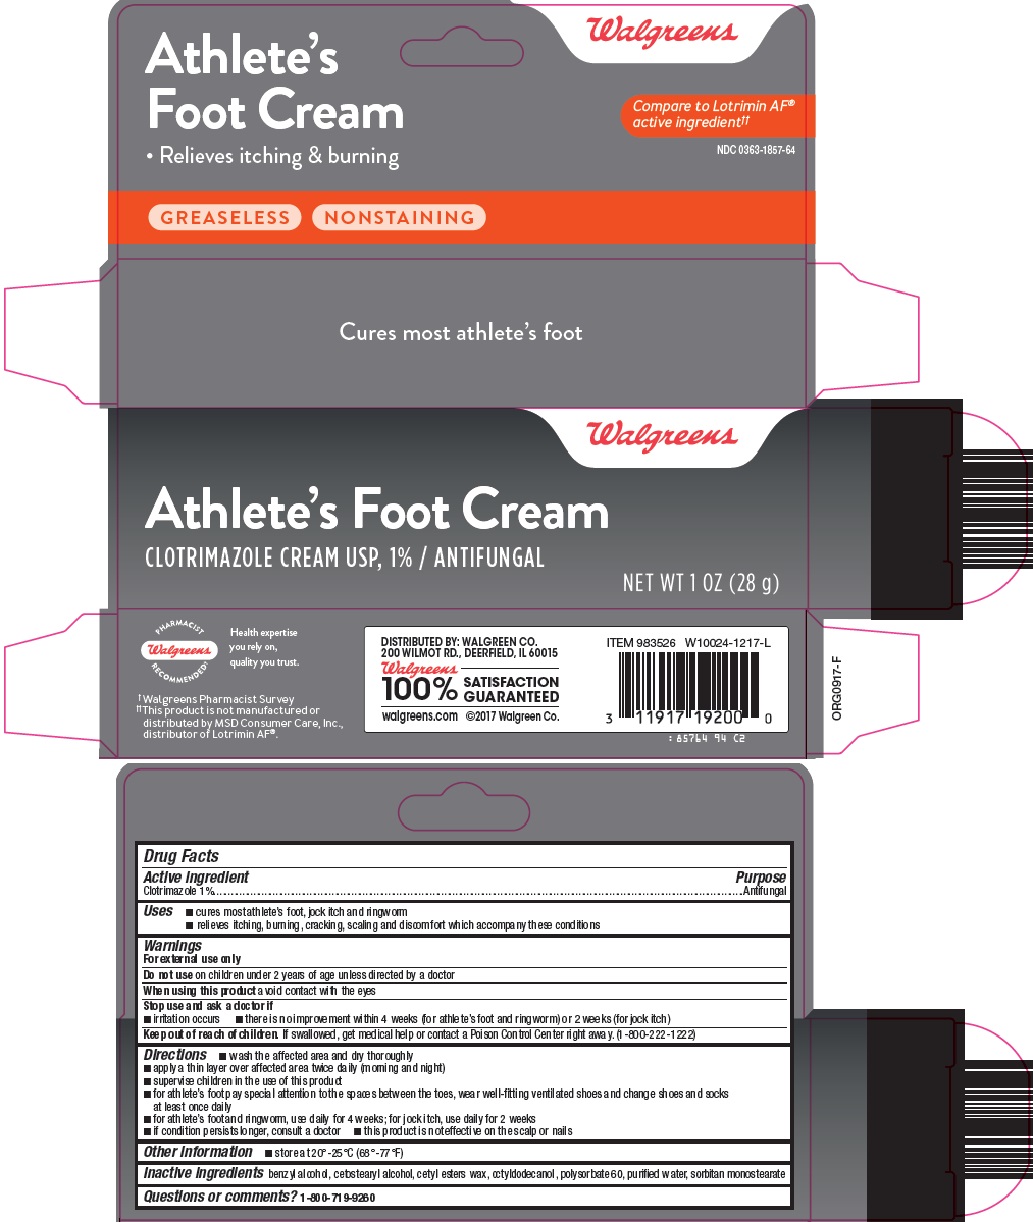 athletes foot cream image